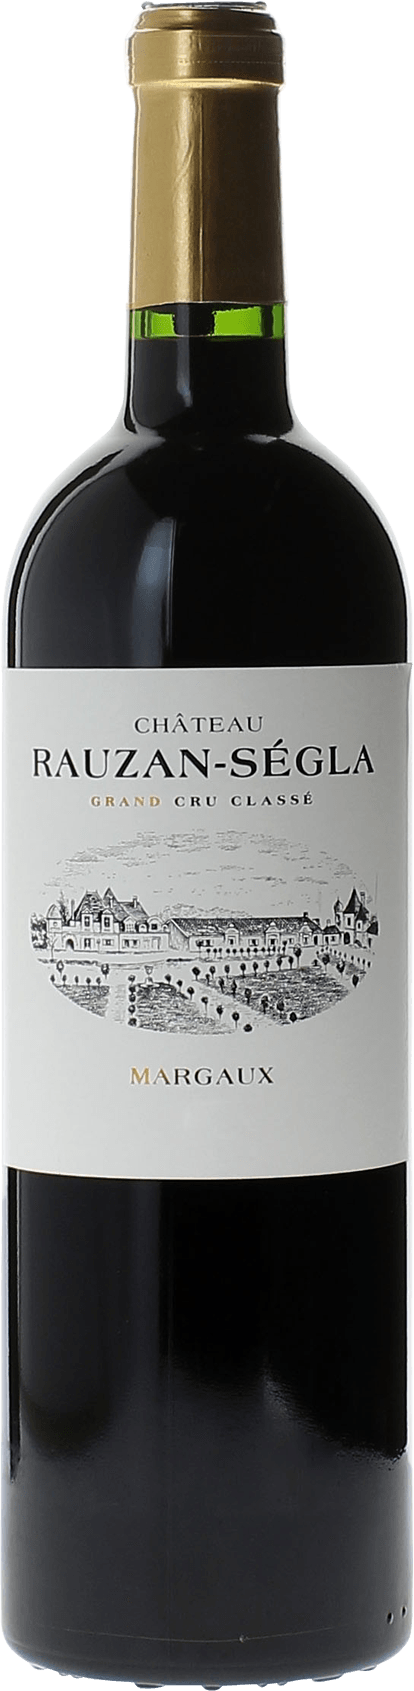 Rauzan-segla 2005 2me Grand cru class Margaux, Bordeaux rouge